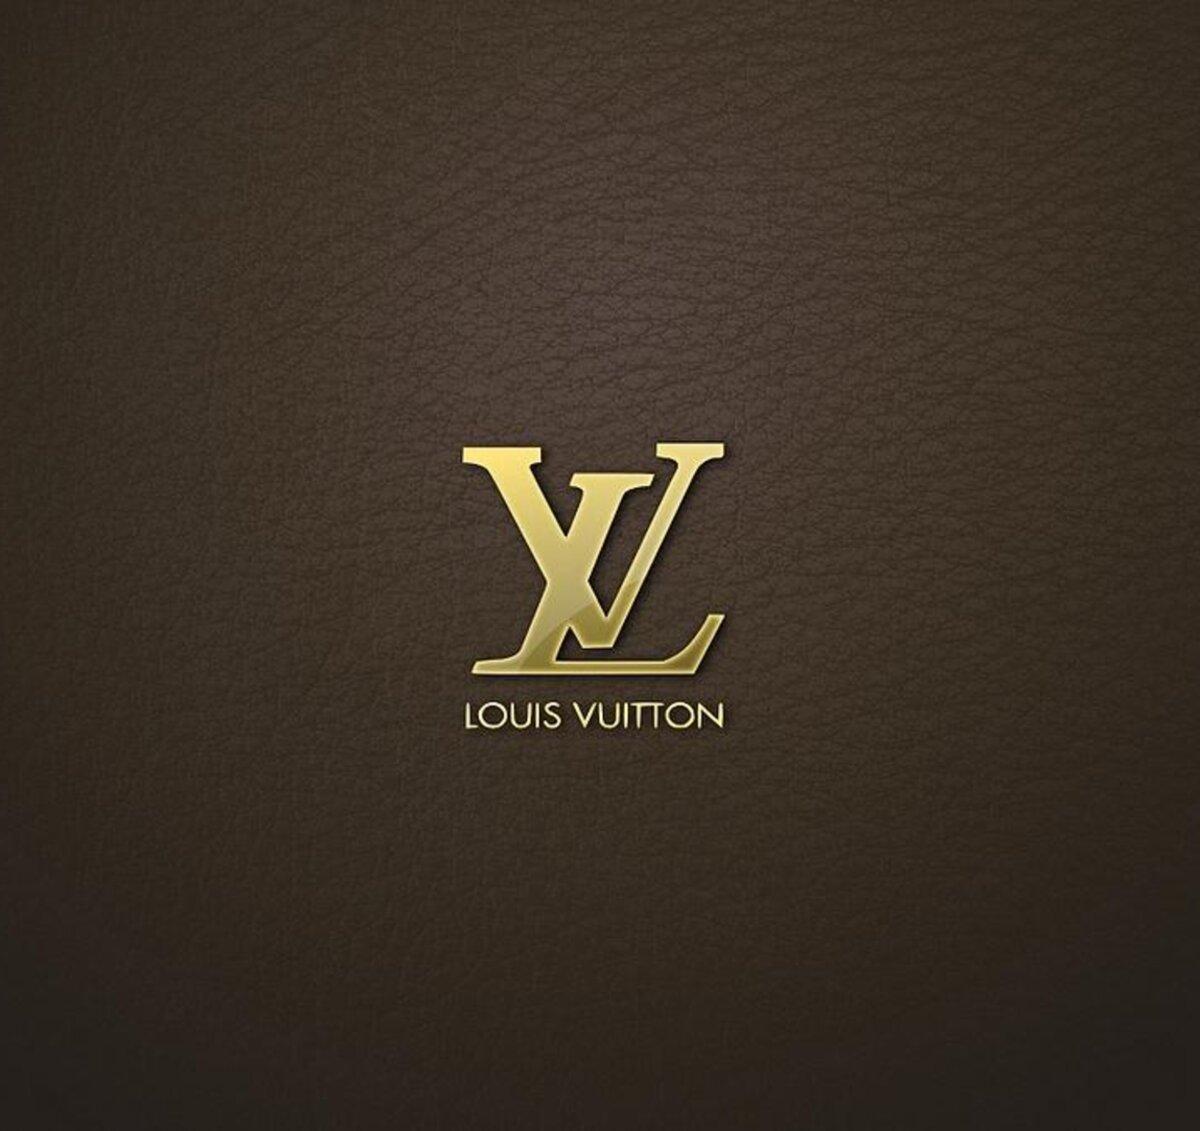 Louis Vuitton Face Mask for Sale by Aaron De Wulf